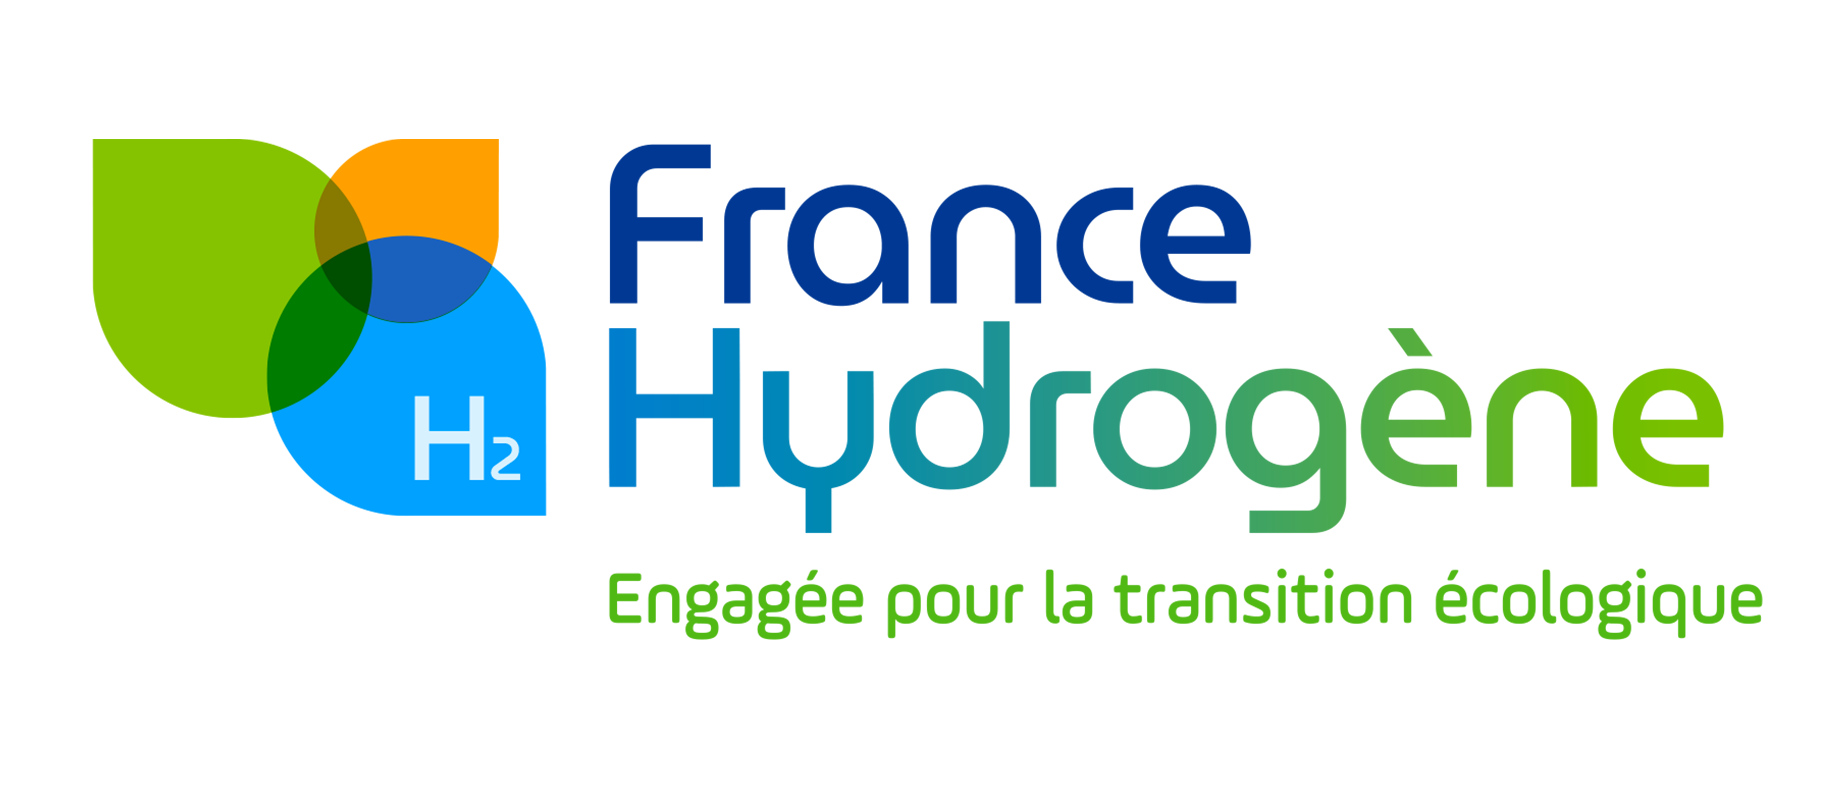 France - Hydrogene